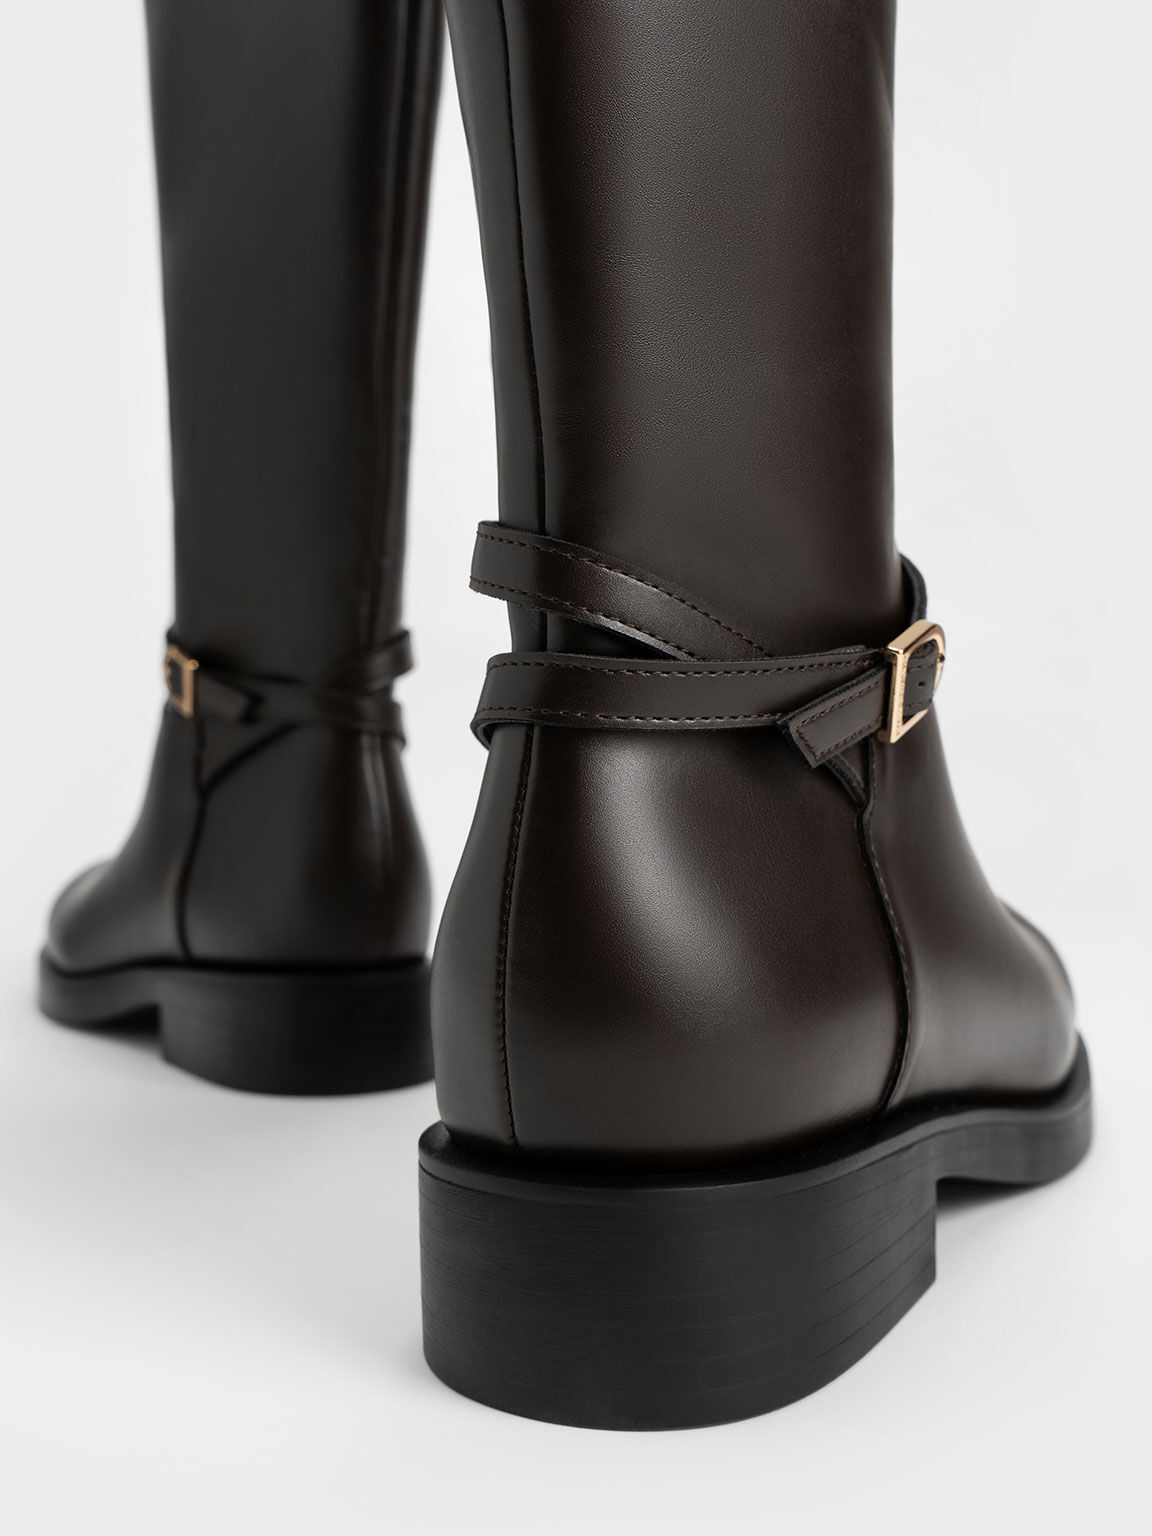 Belted Knee-High Boots, Dark Brown, hi-res